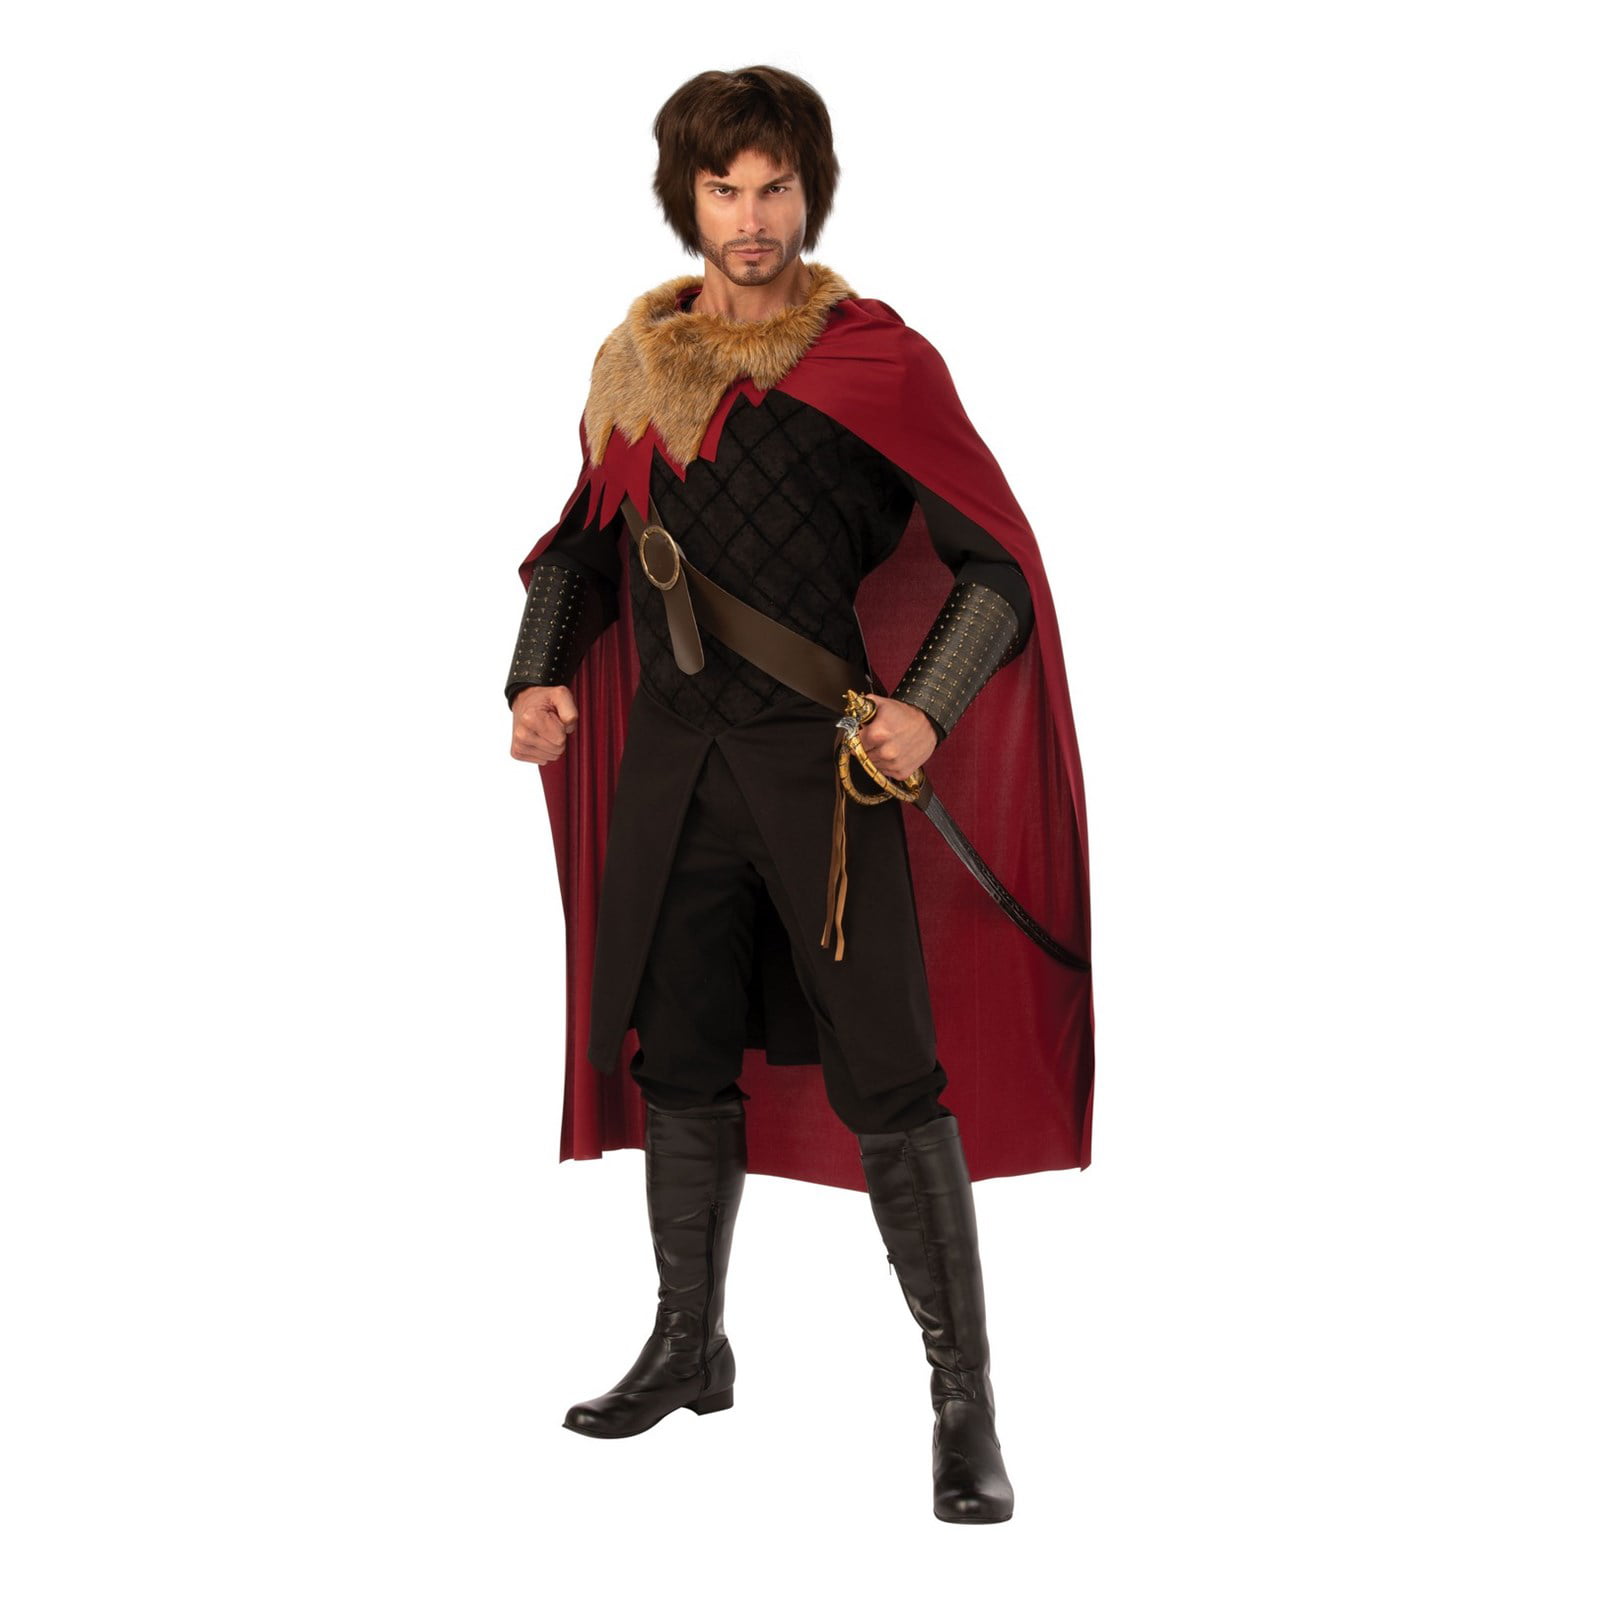 Halloween Medieval King Adult Costume - Walmart.com - Walmart.com